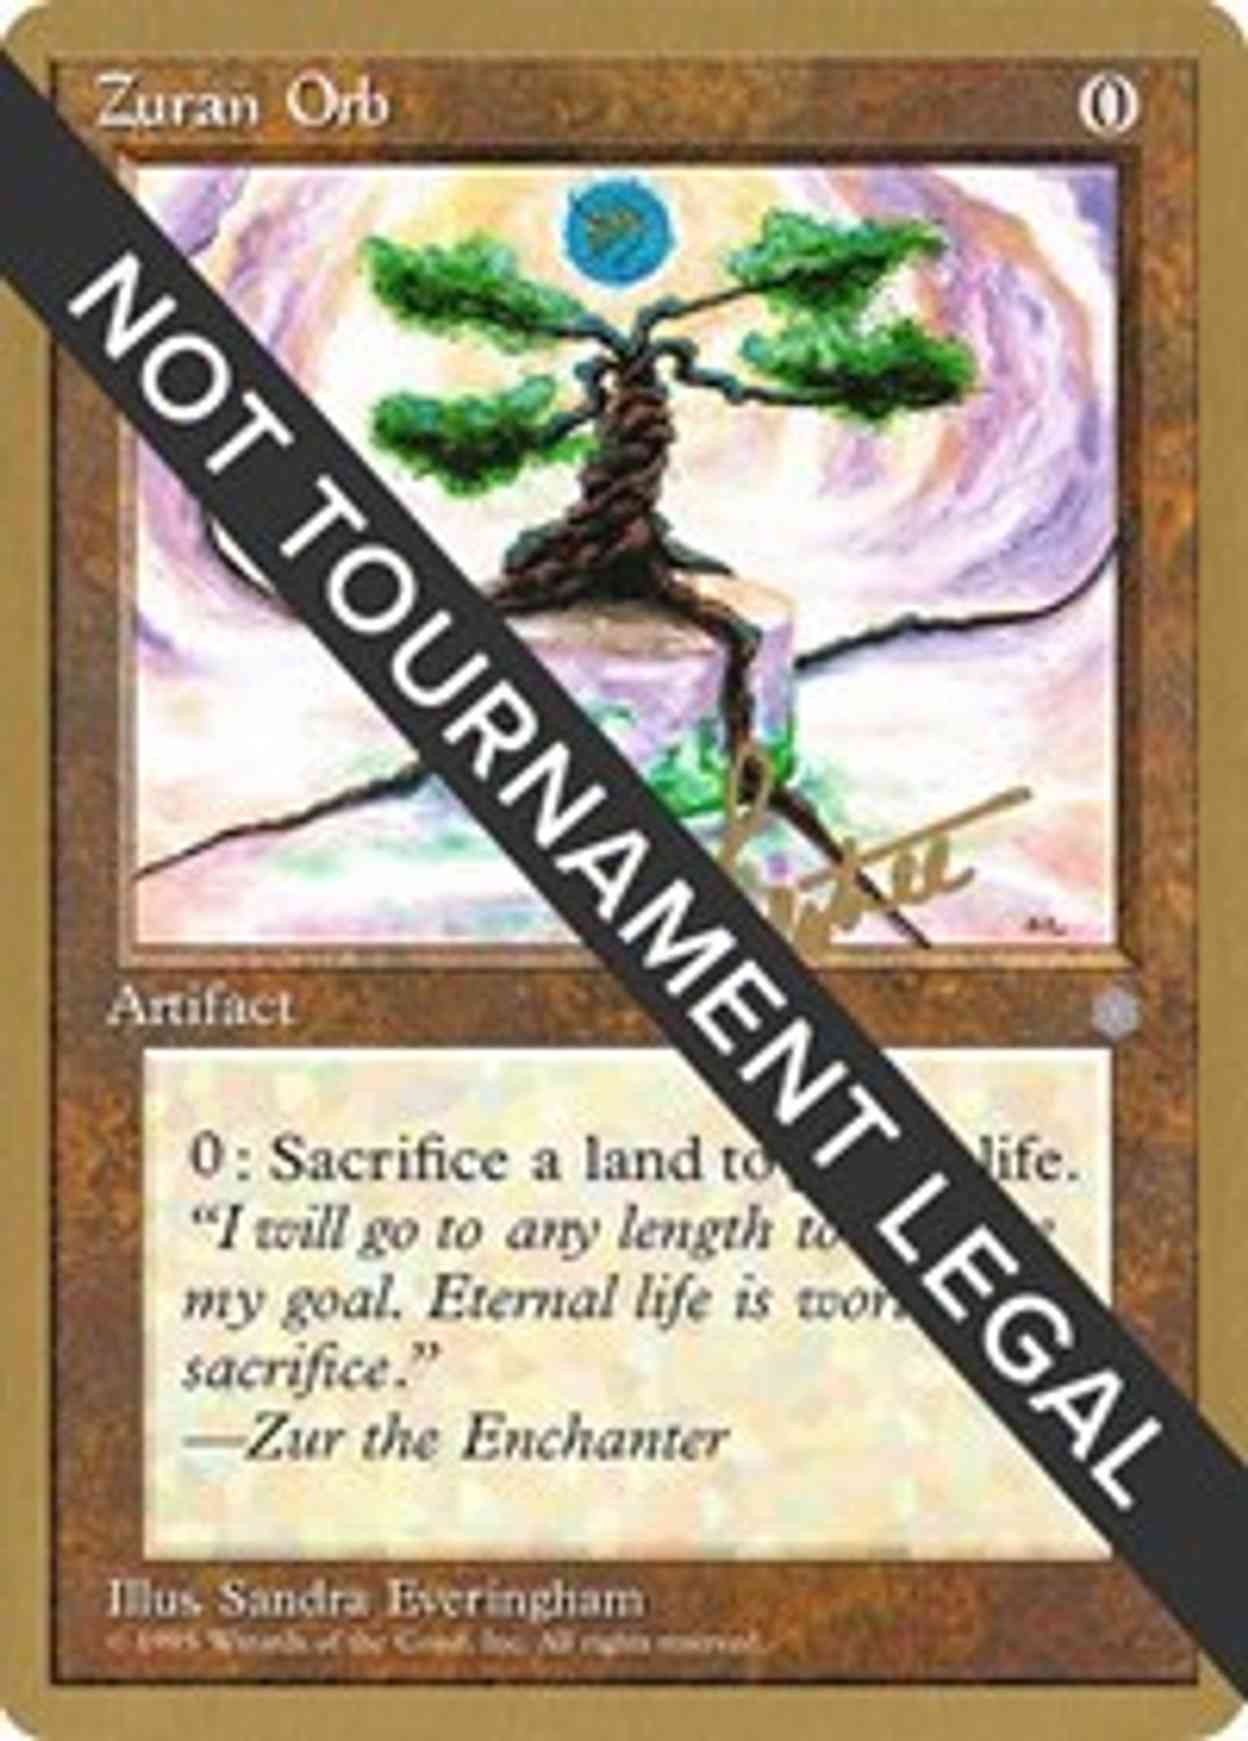 Zuran Orb - 1996 Bertrand Lestree (ICE) magic card front